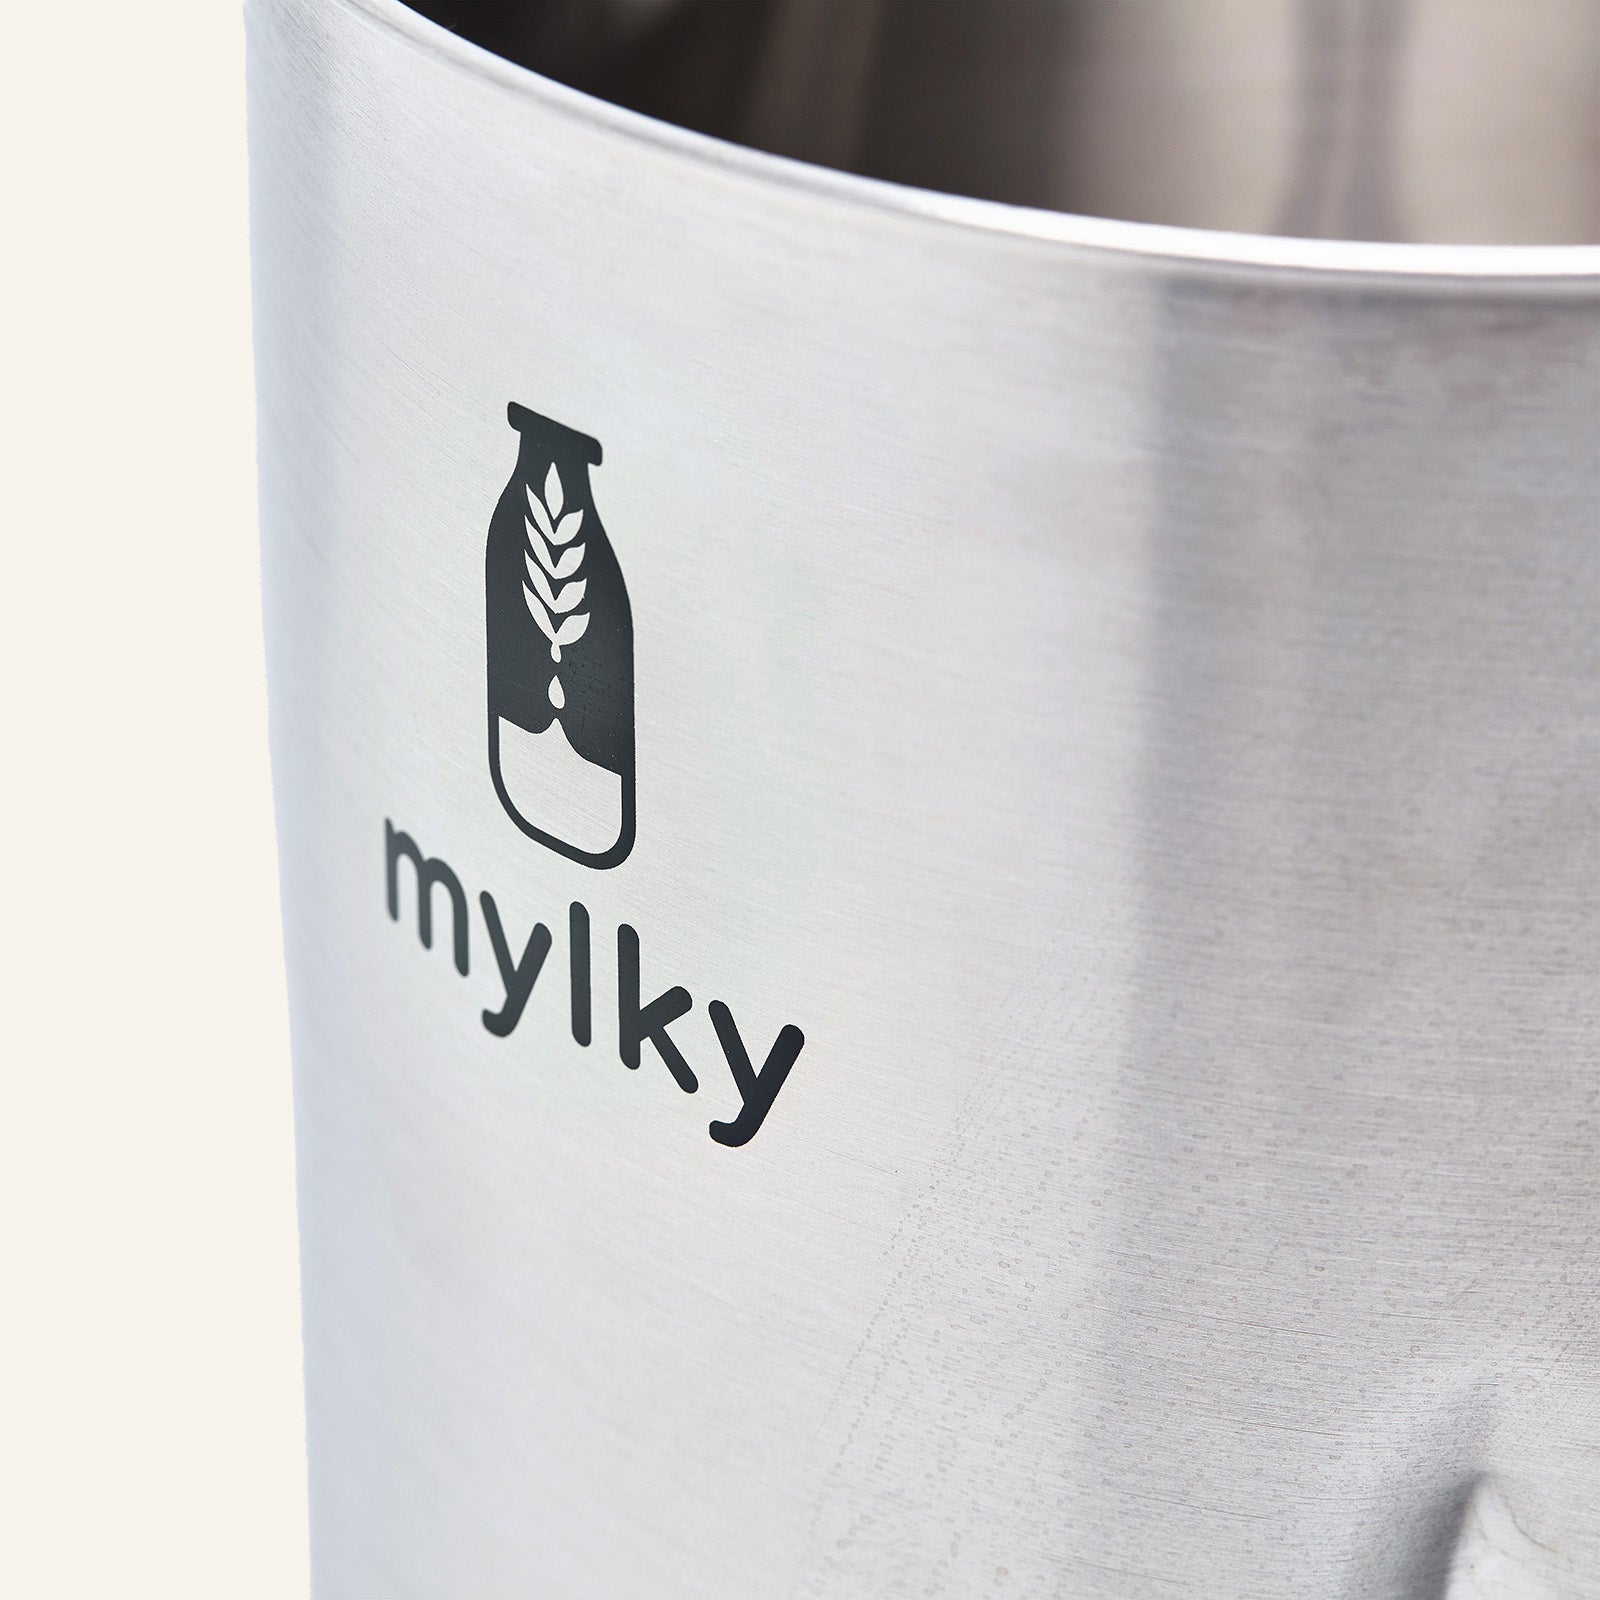 Mylky - The New Milk Maker